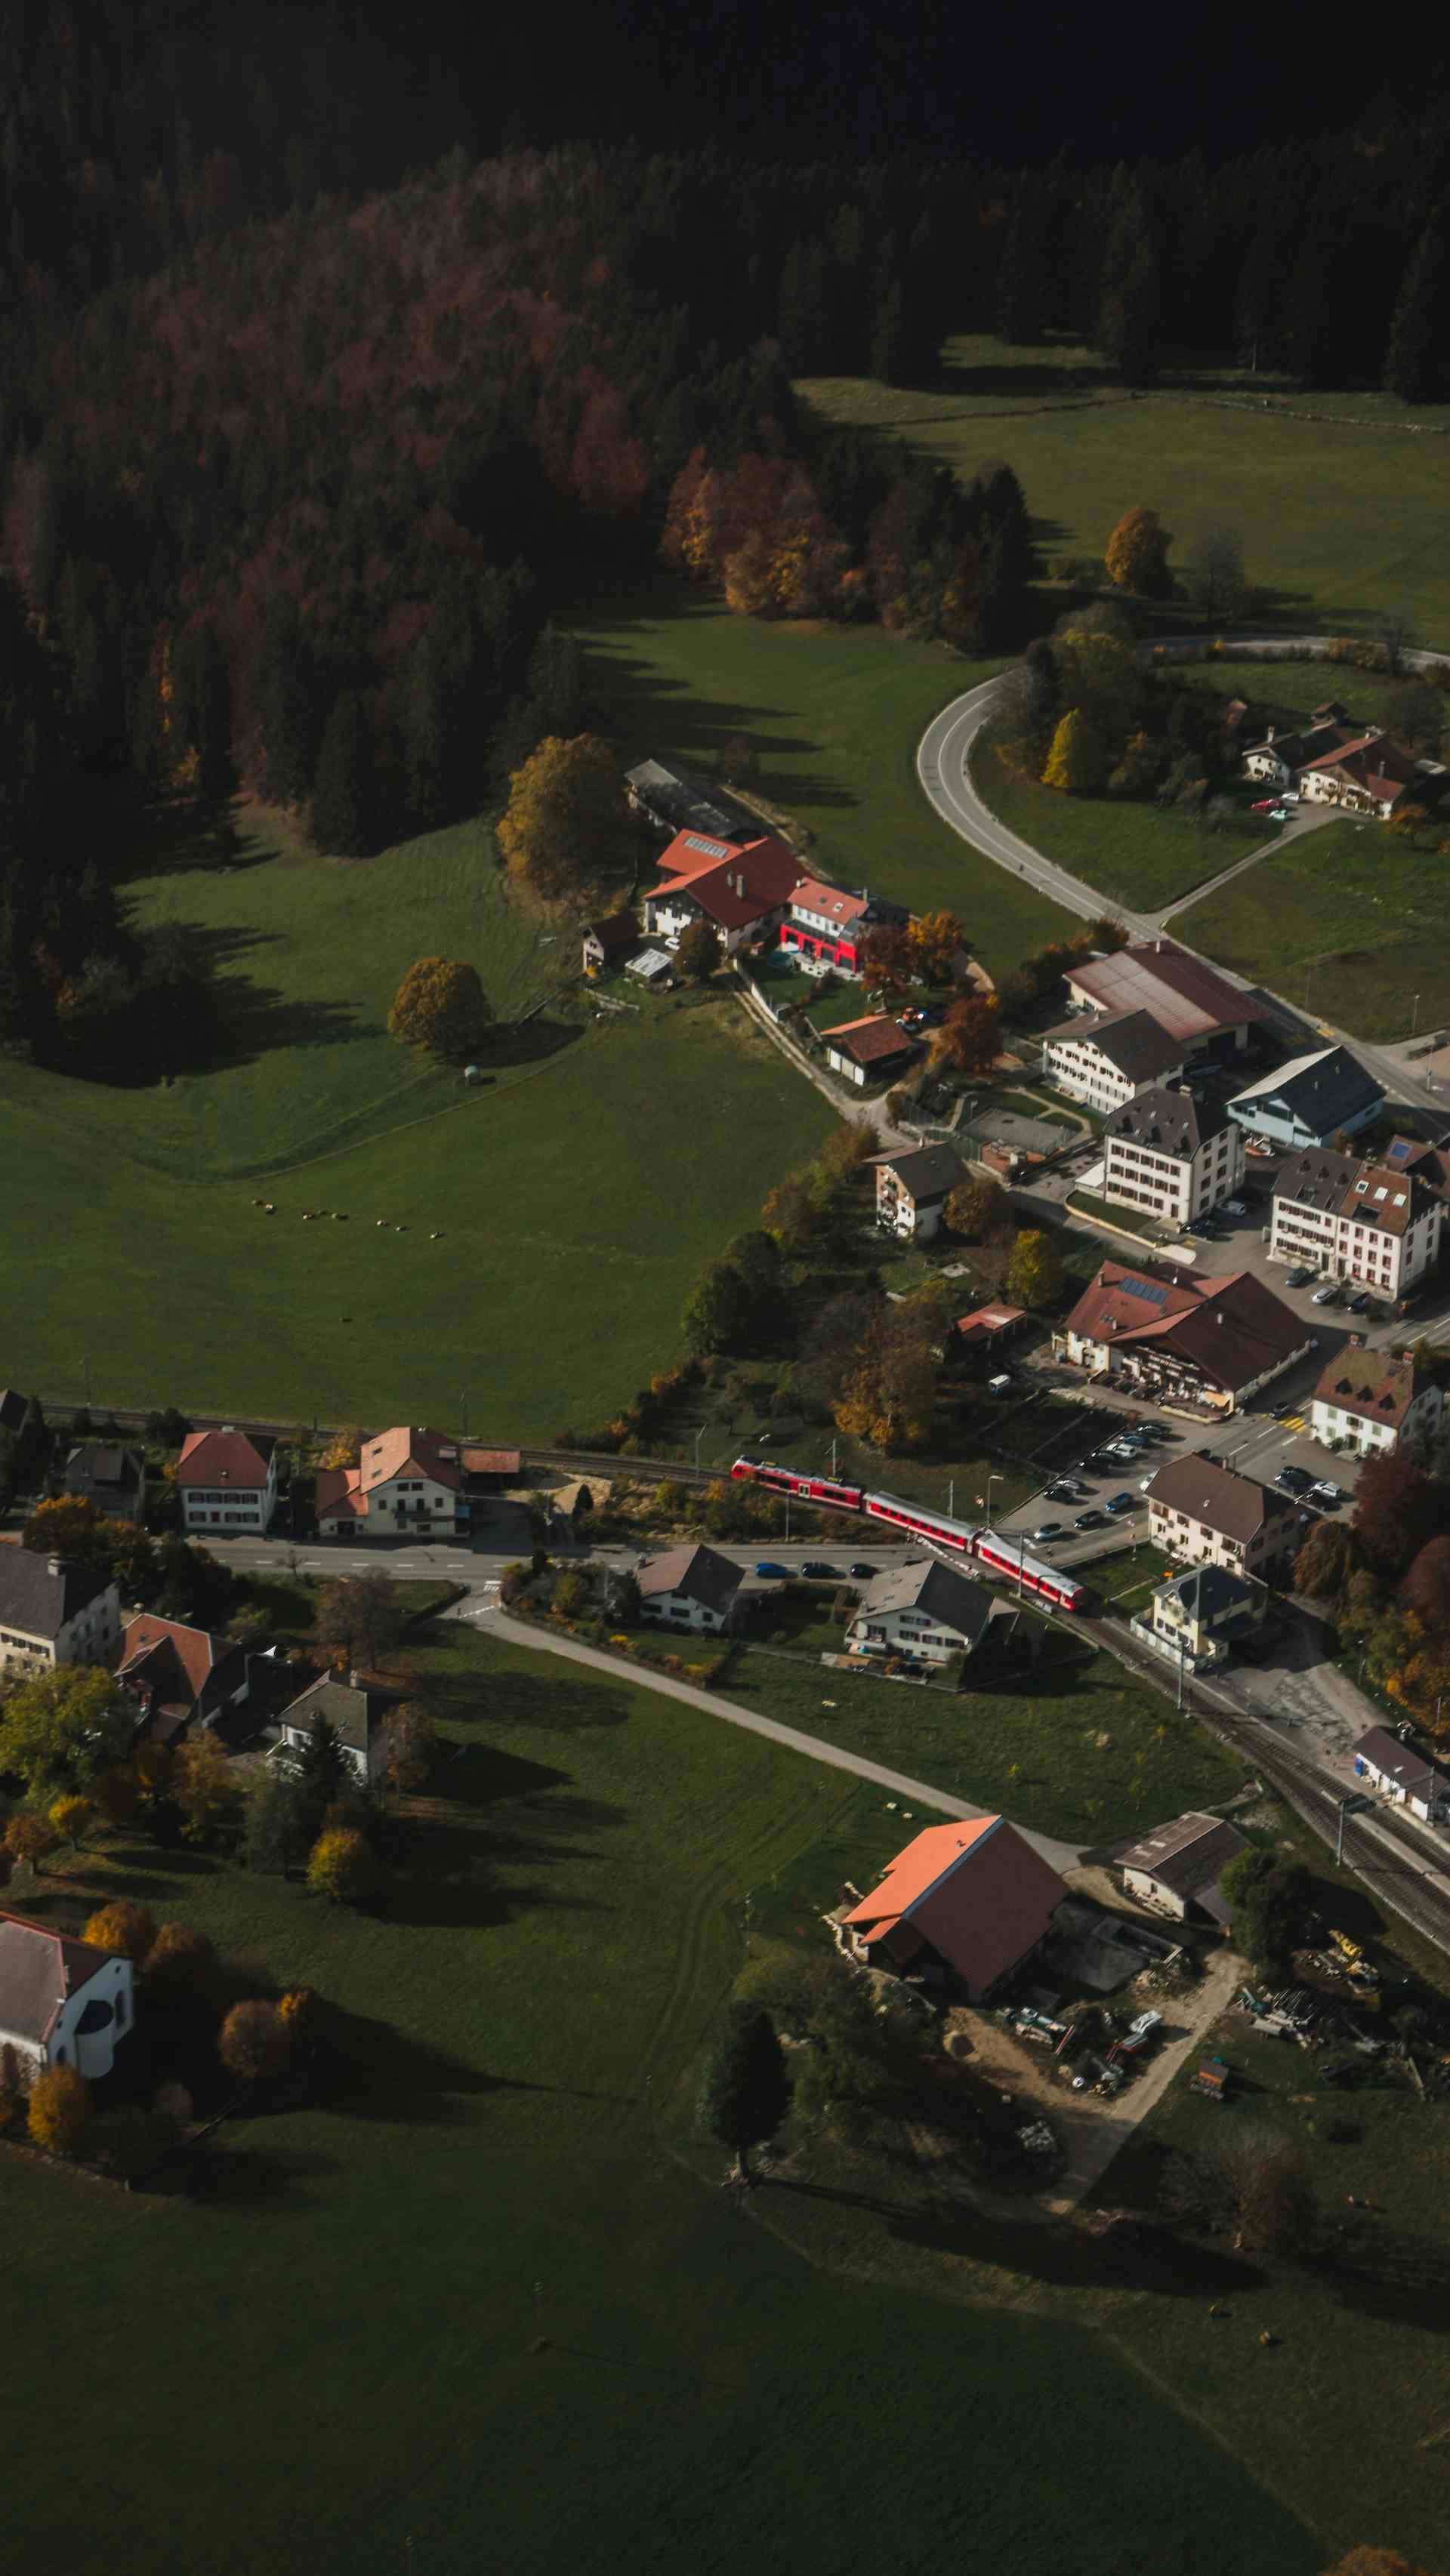 Ferme de Erzer, producer in Mervelier canton of Jura in Switzerland